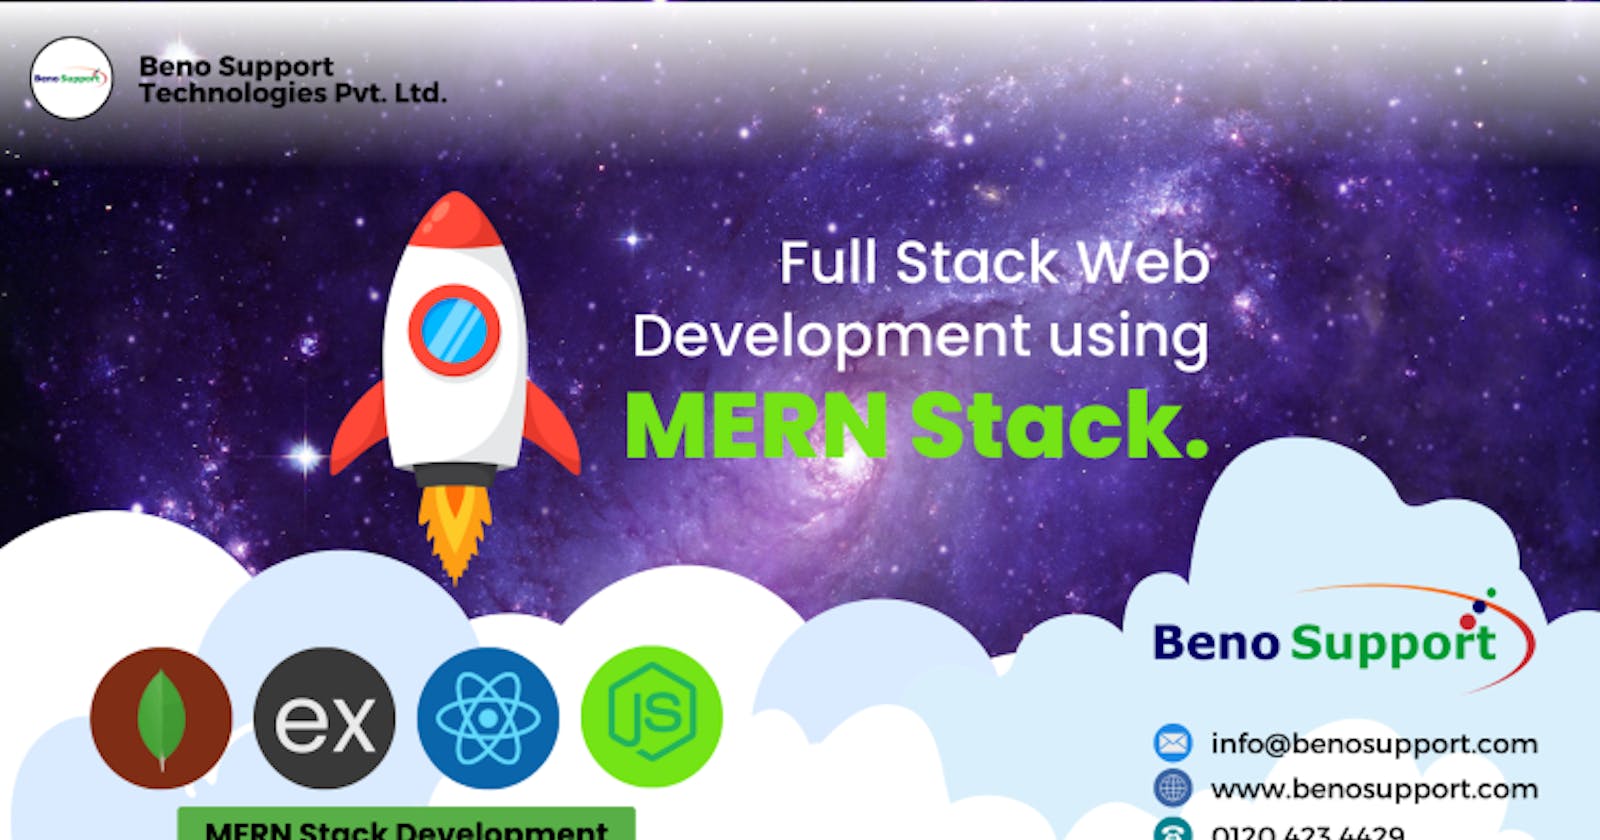 Full Stack Web Development using MERN Stack